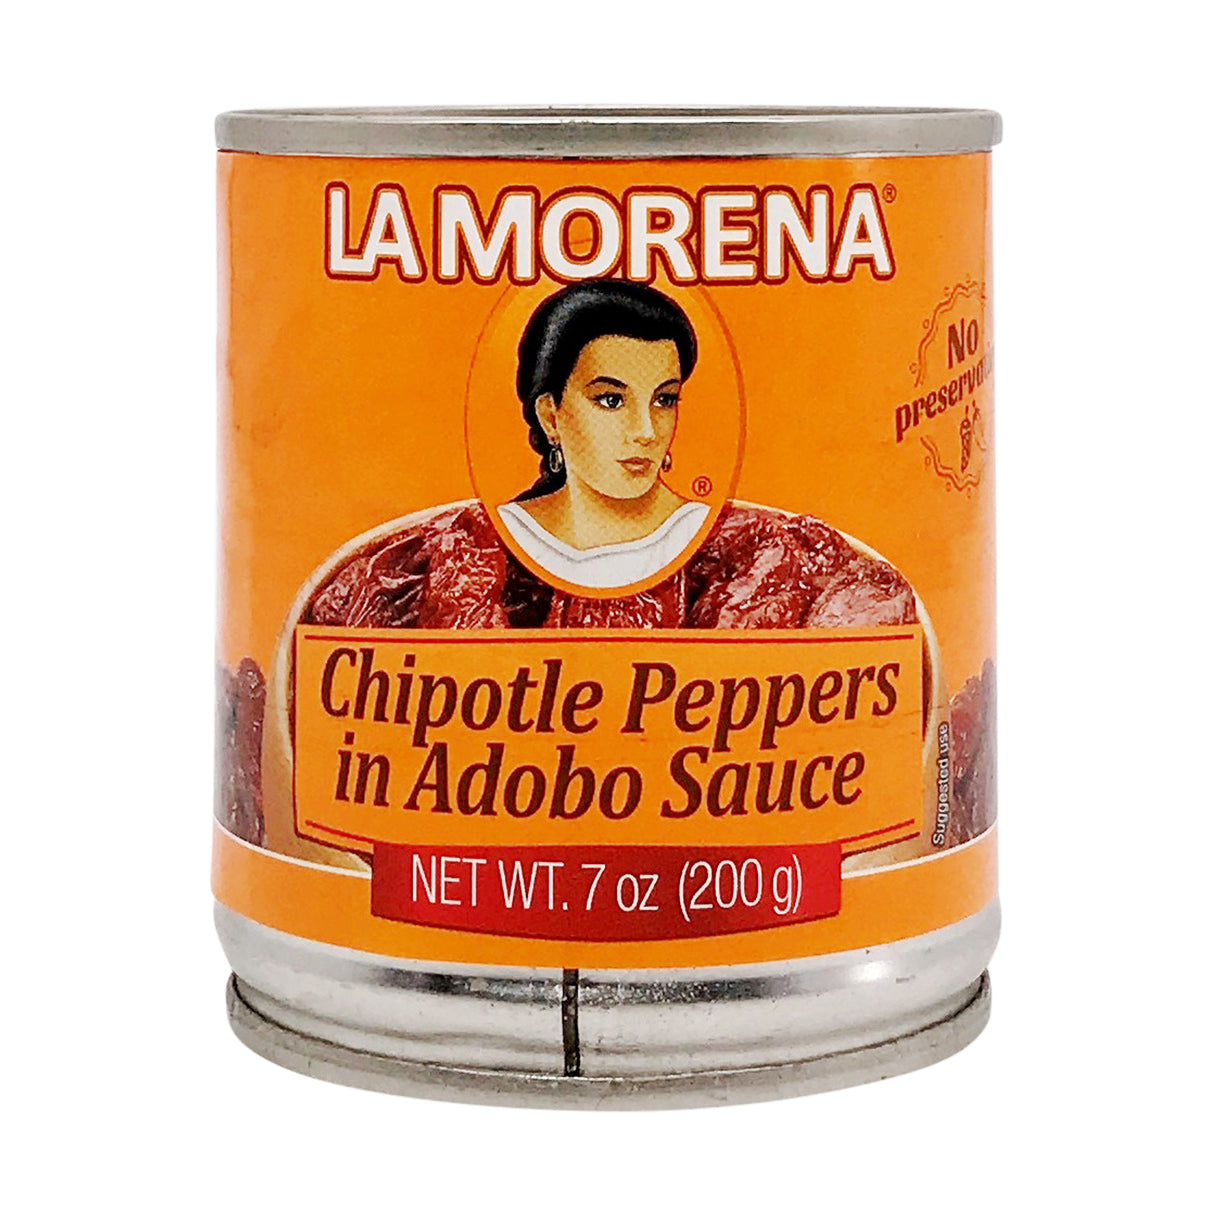 La Morena Chipotle Peppers in Adobo Sauce 7oz